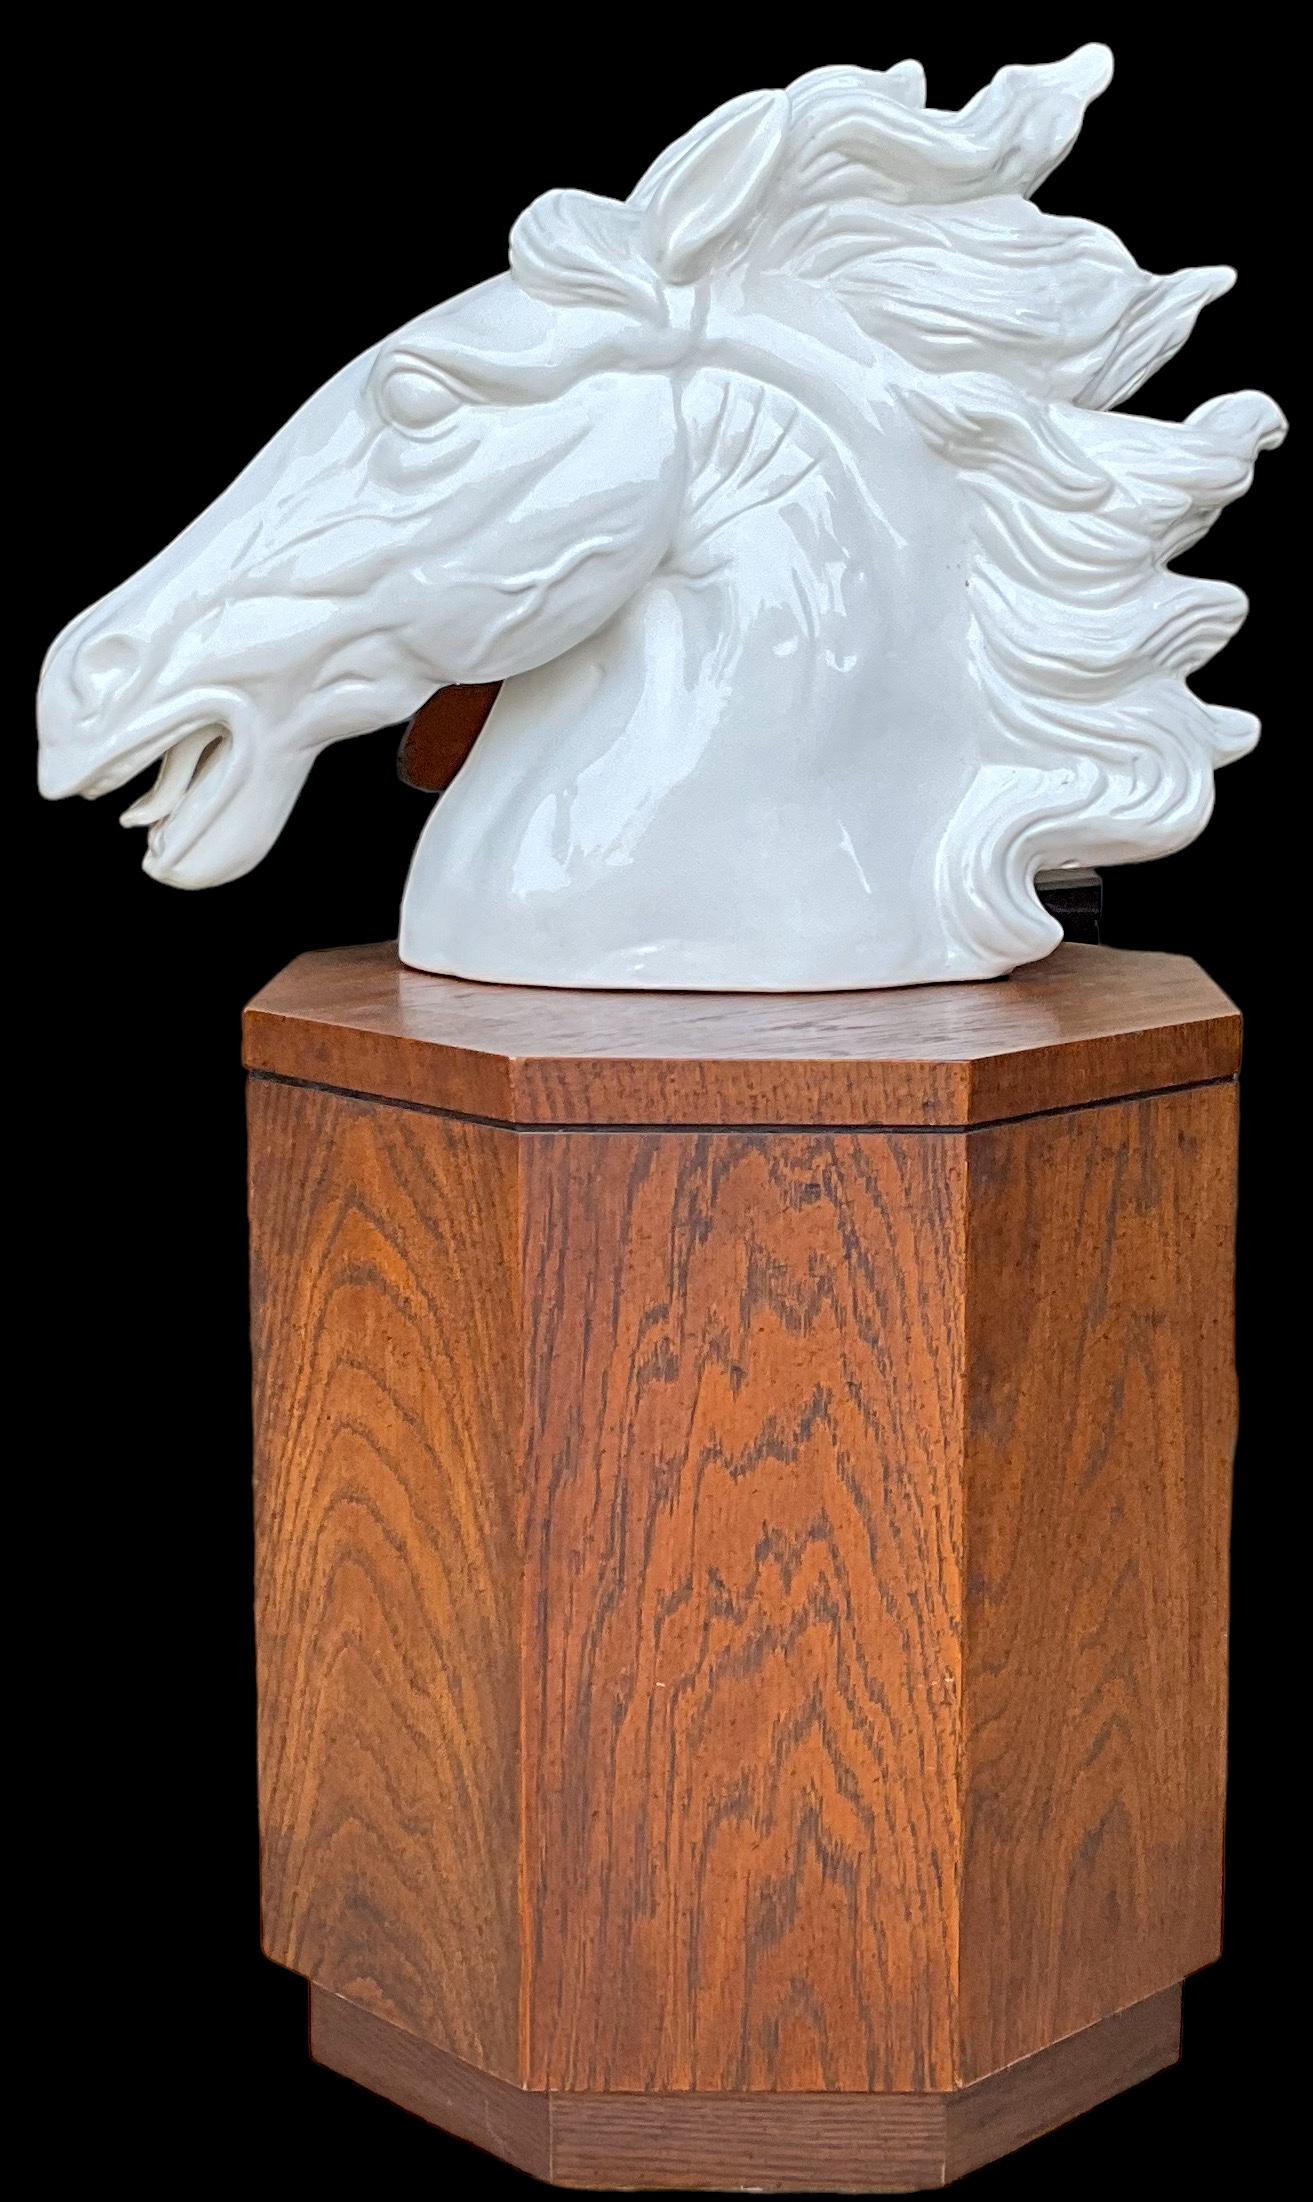 italien Grande statue de cheval buste en céramique blanche de style néoclassique blanc en vente